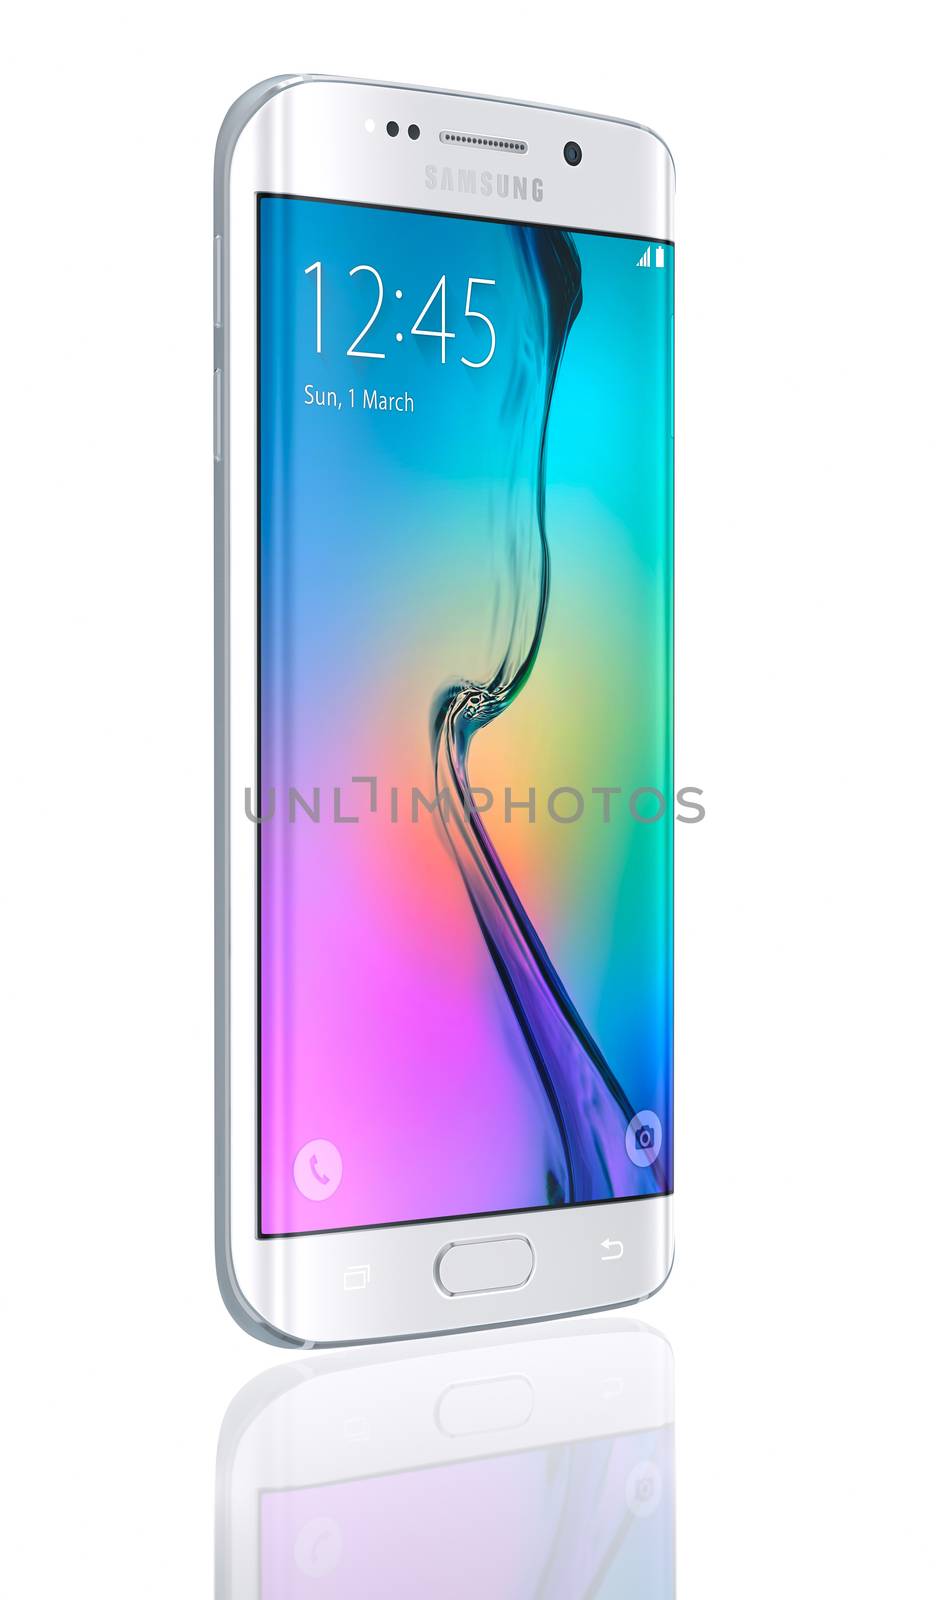 Samsung Galaxy S6 Edge by manaemedia